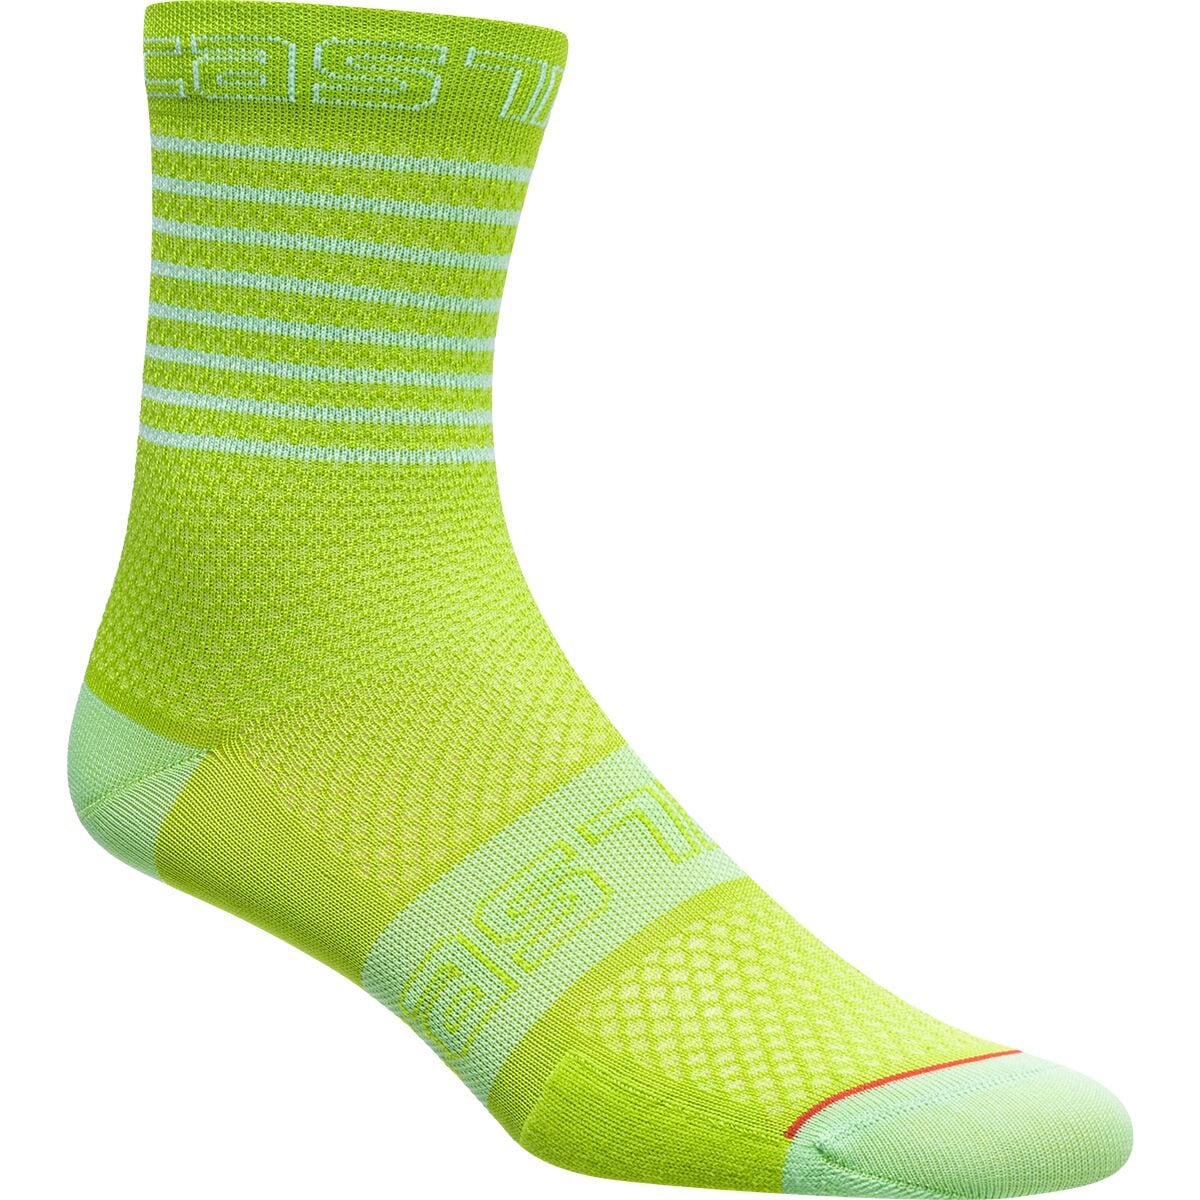 Castelli Superleggera 12 Sock - Women's Bright Lime, L/XL